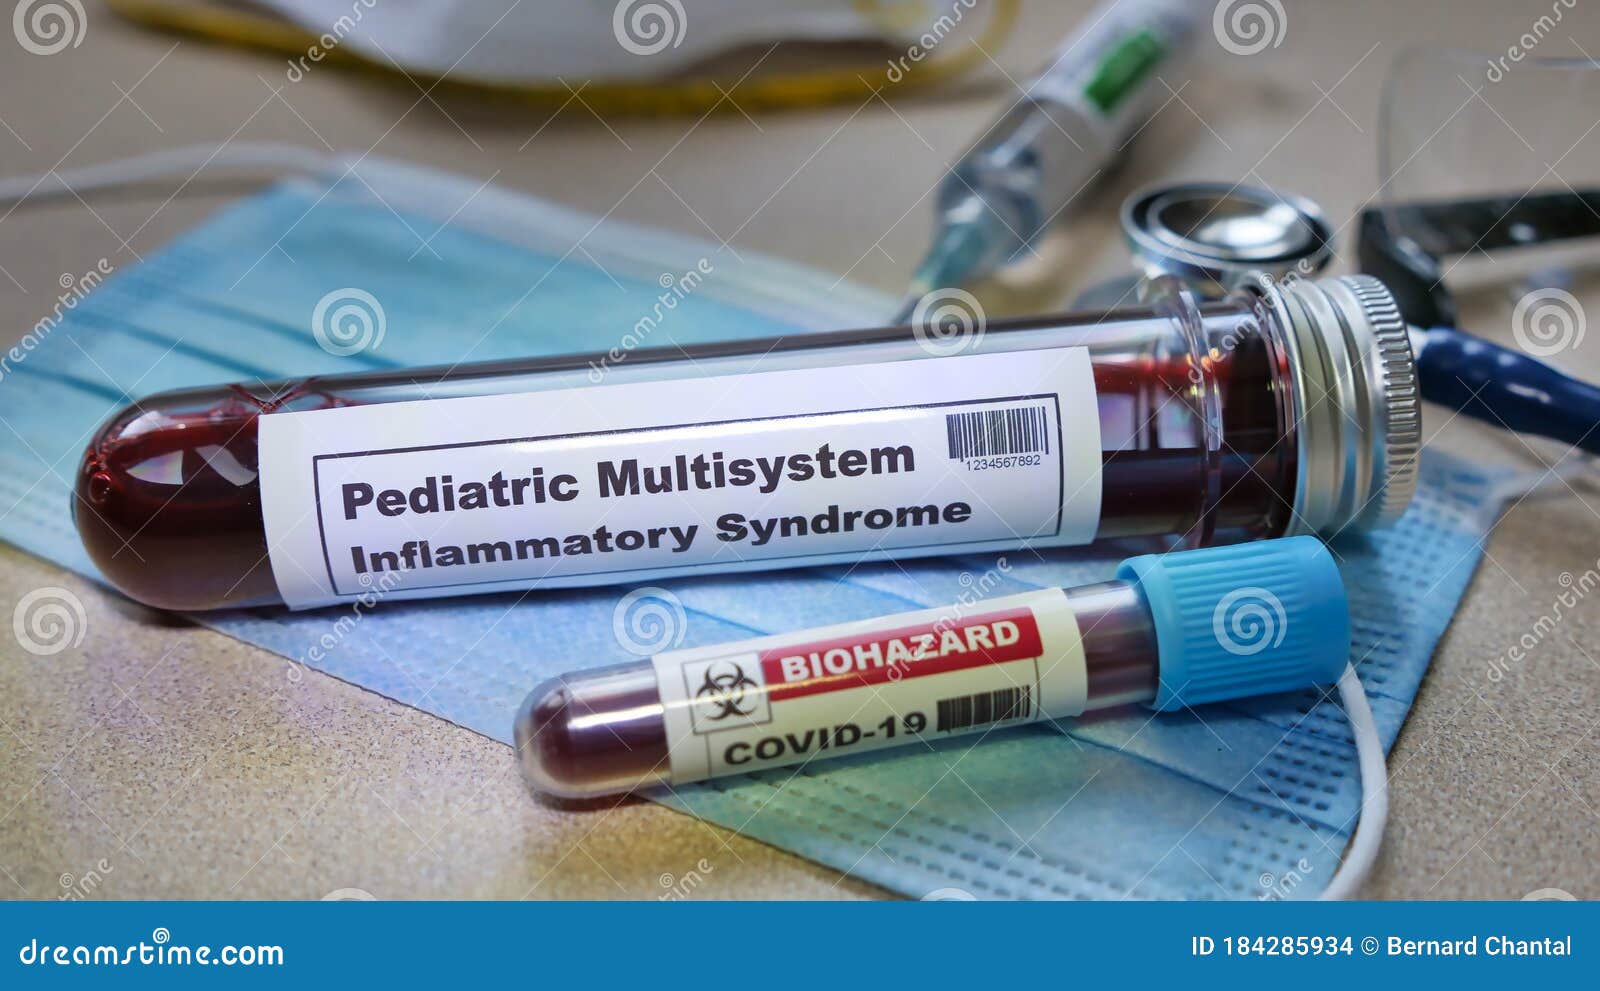 pediatric multisystem inflammatory syndrome.